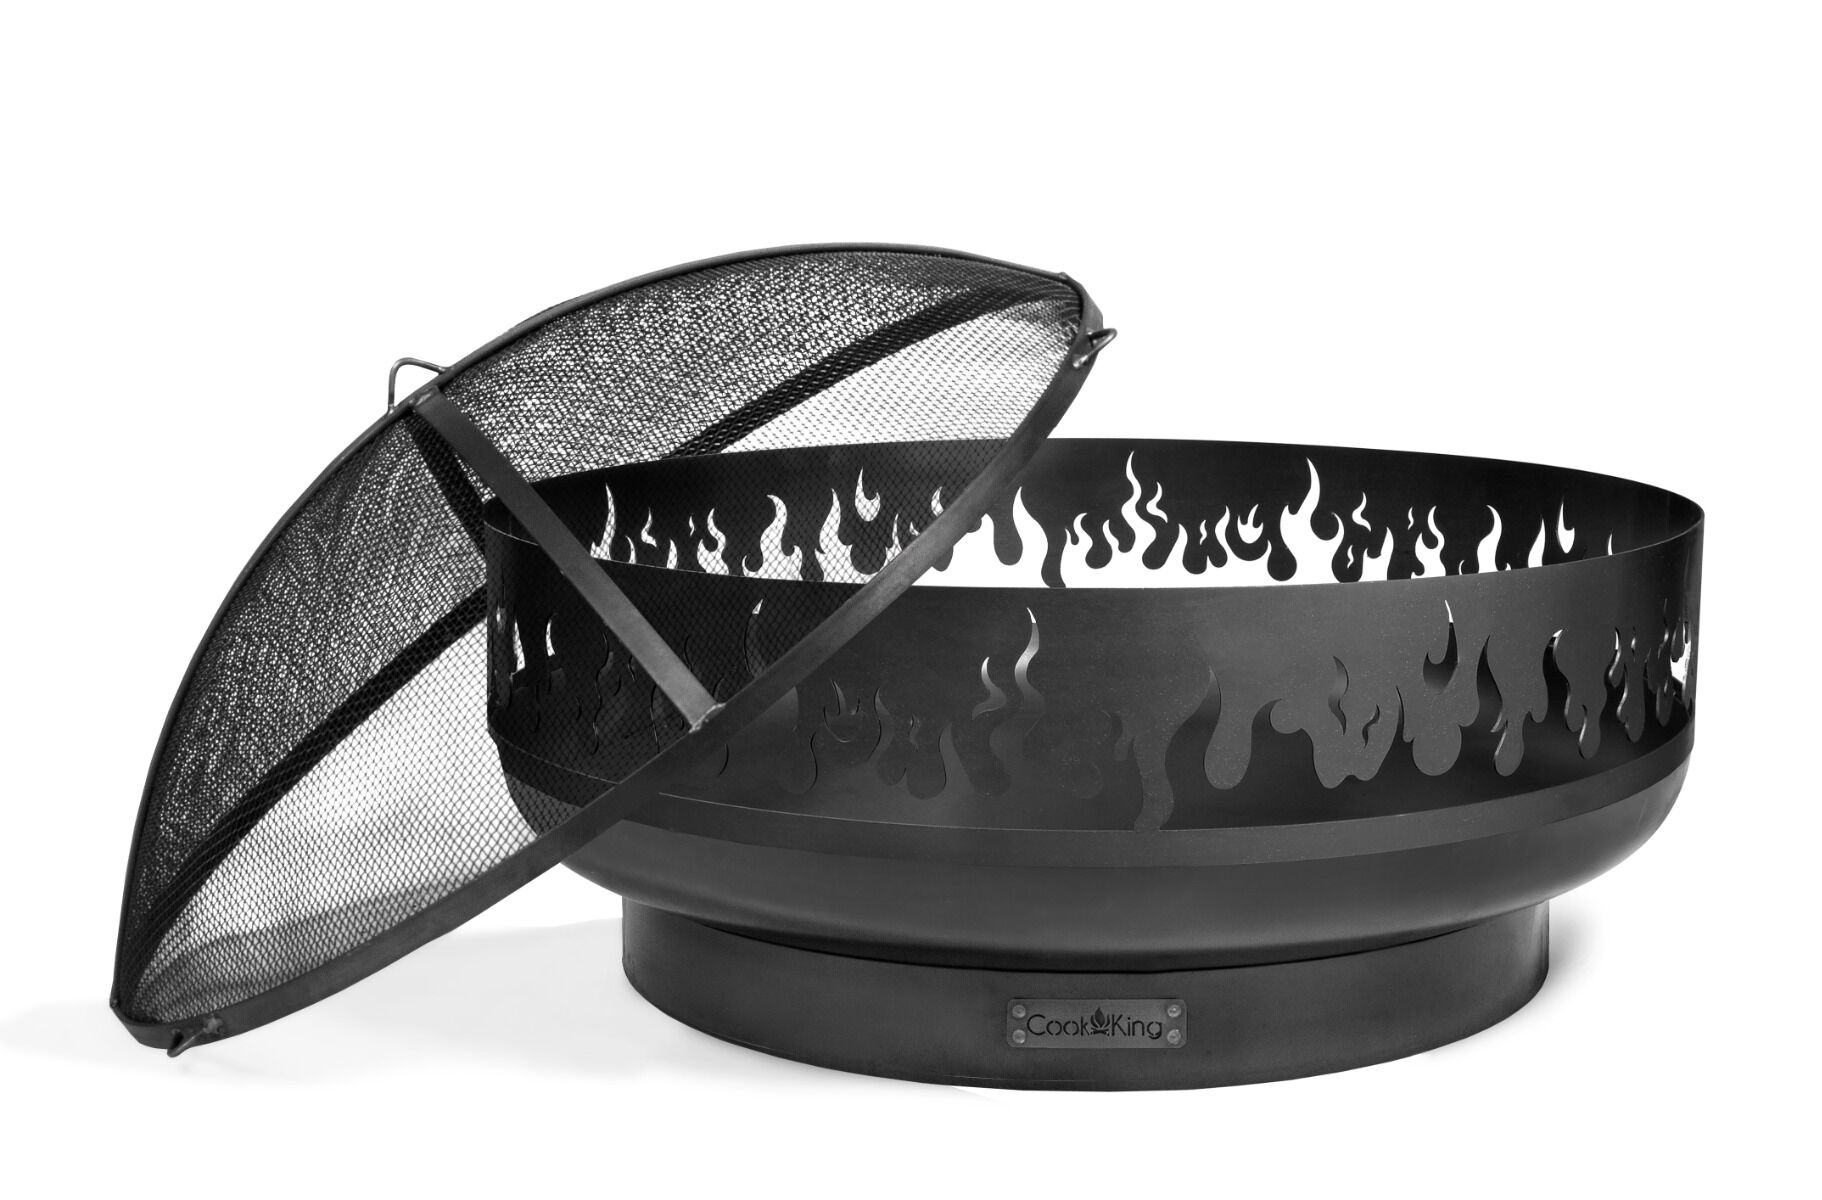 CookKing Fire Bowl Fire 80 cm